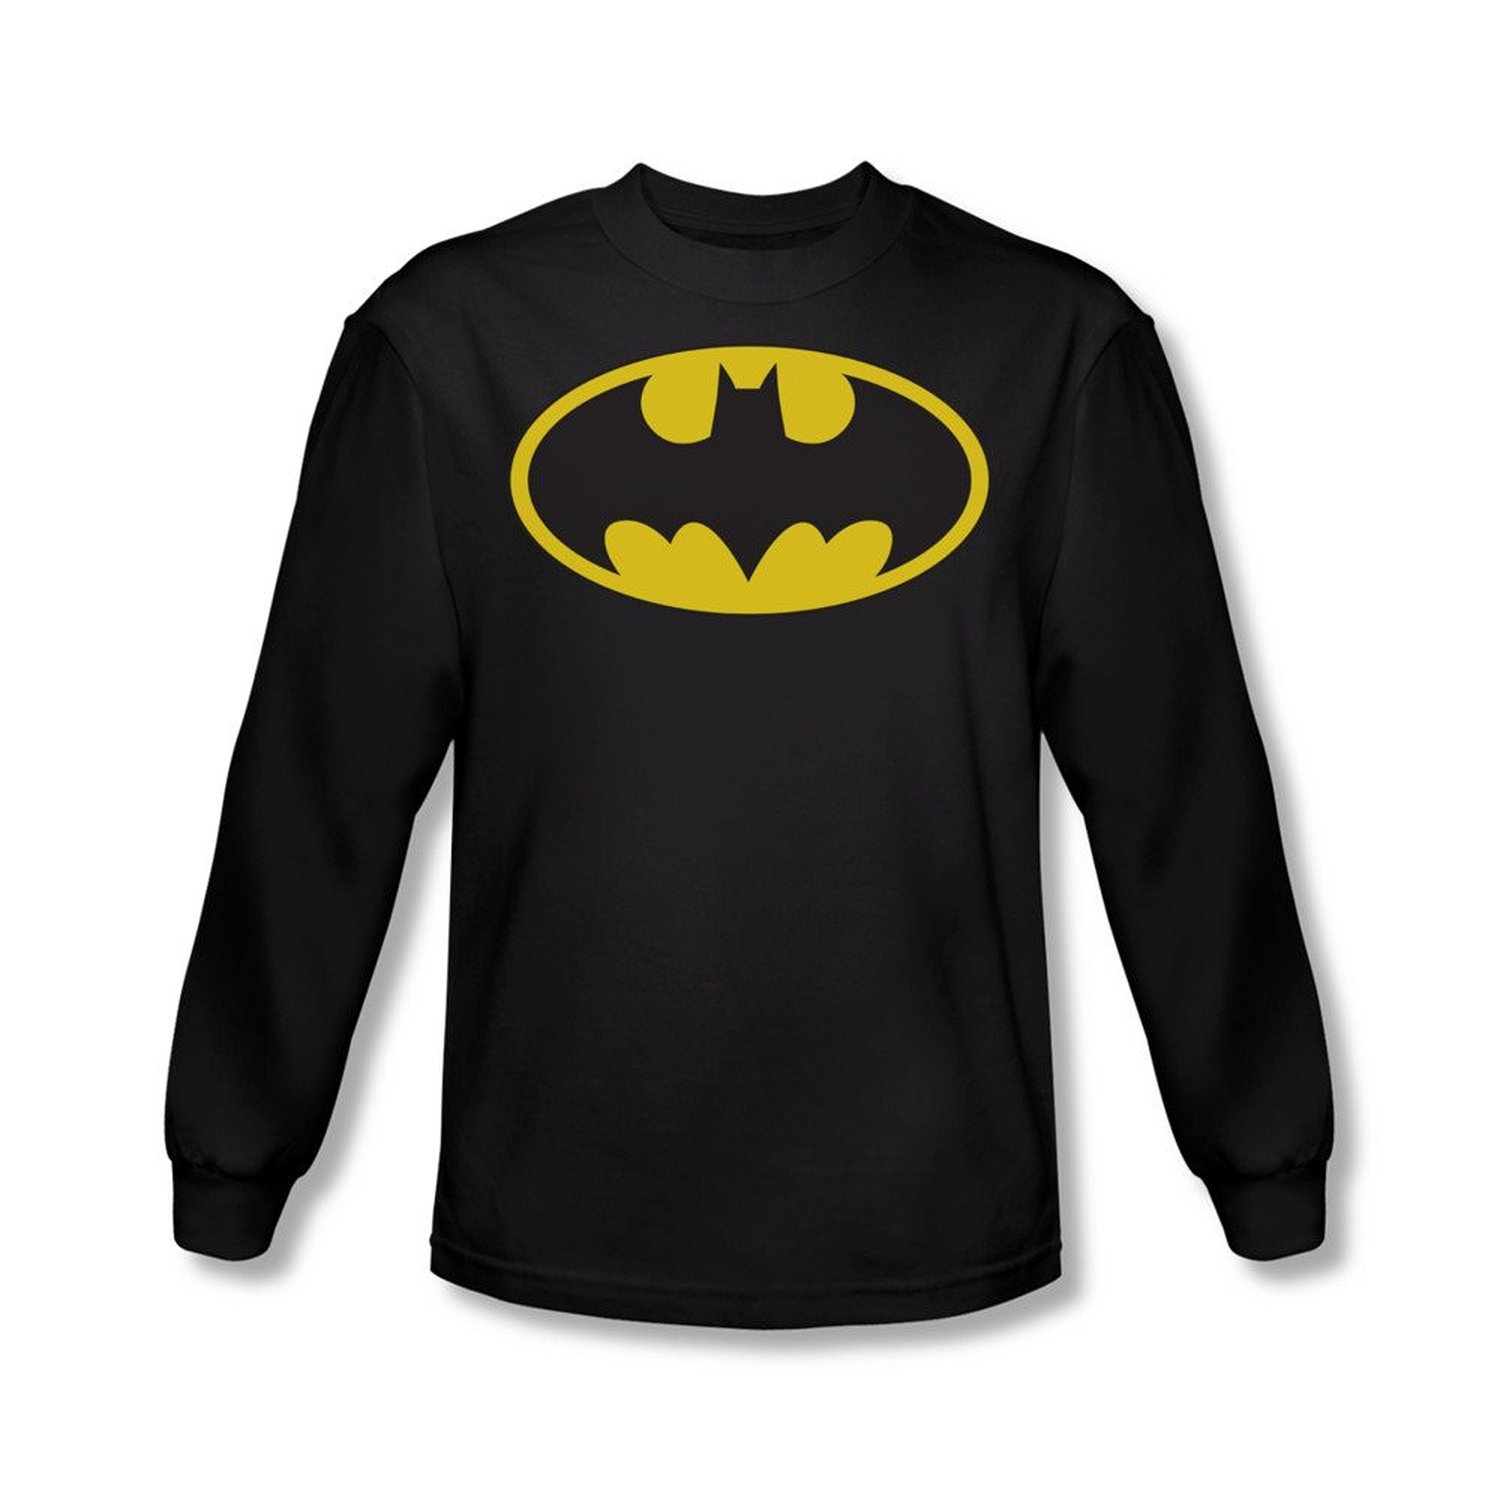 Amazon.com: Batman Symbol Long-sleeve Shirt (Extra Large, Black ...